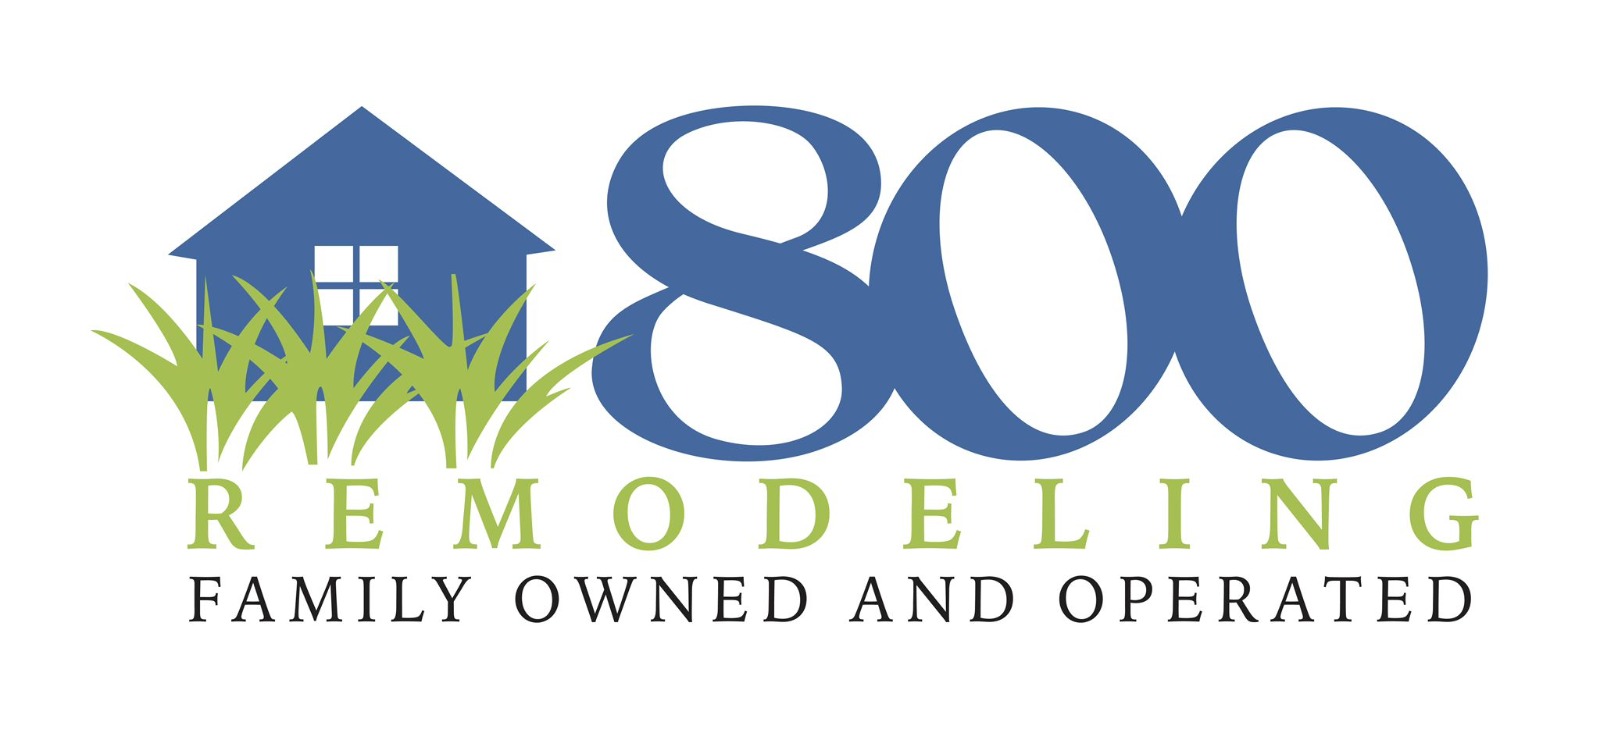 800 Remodeling, Inc. Logo